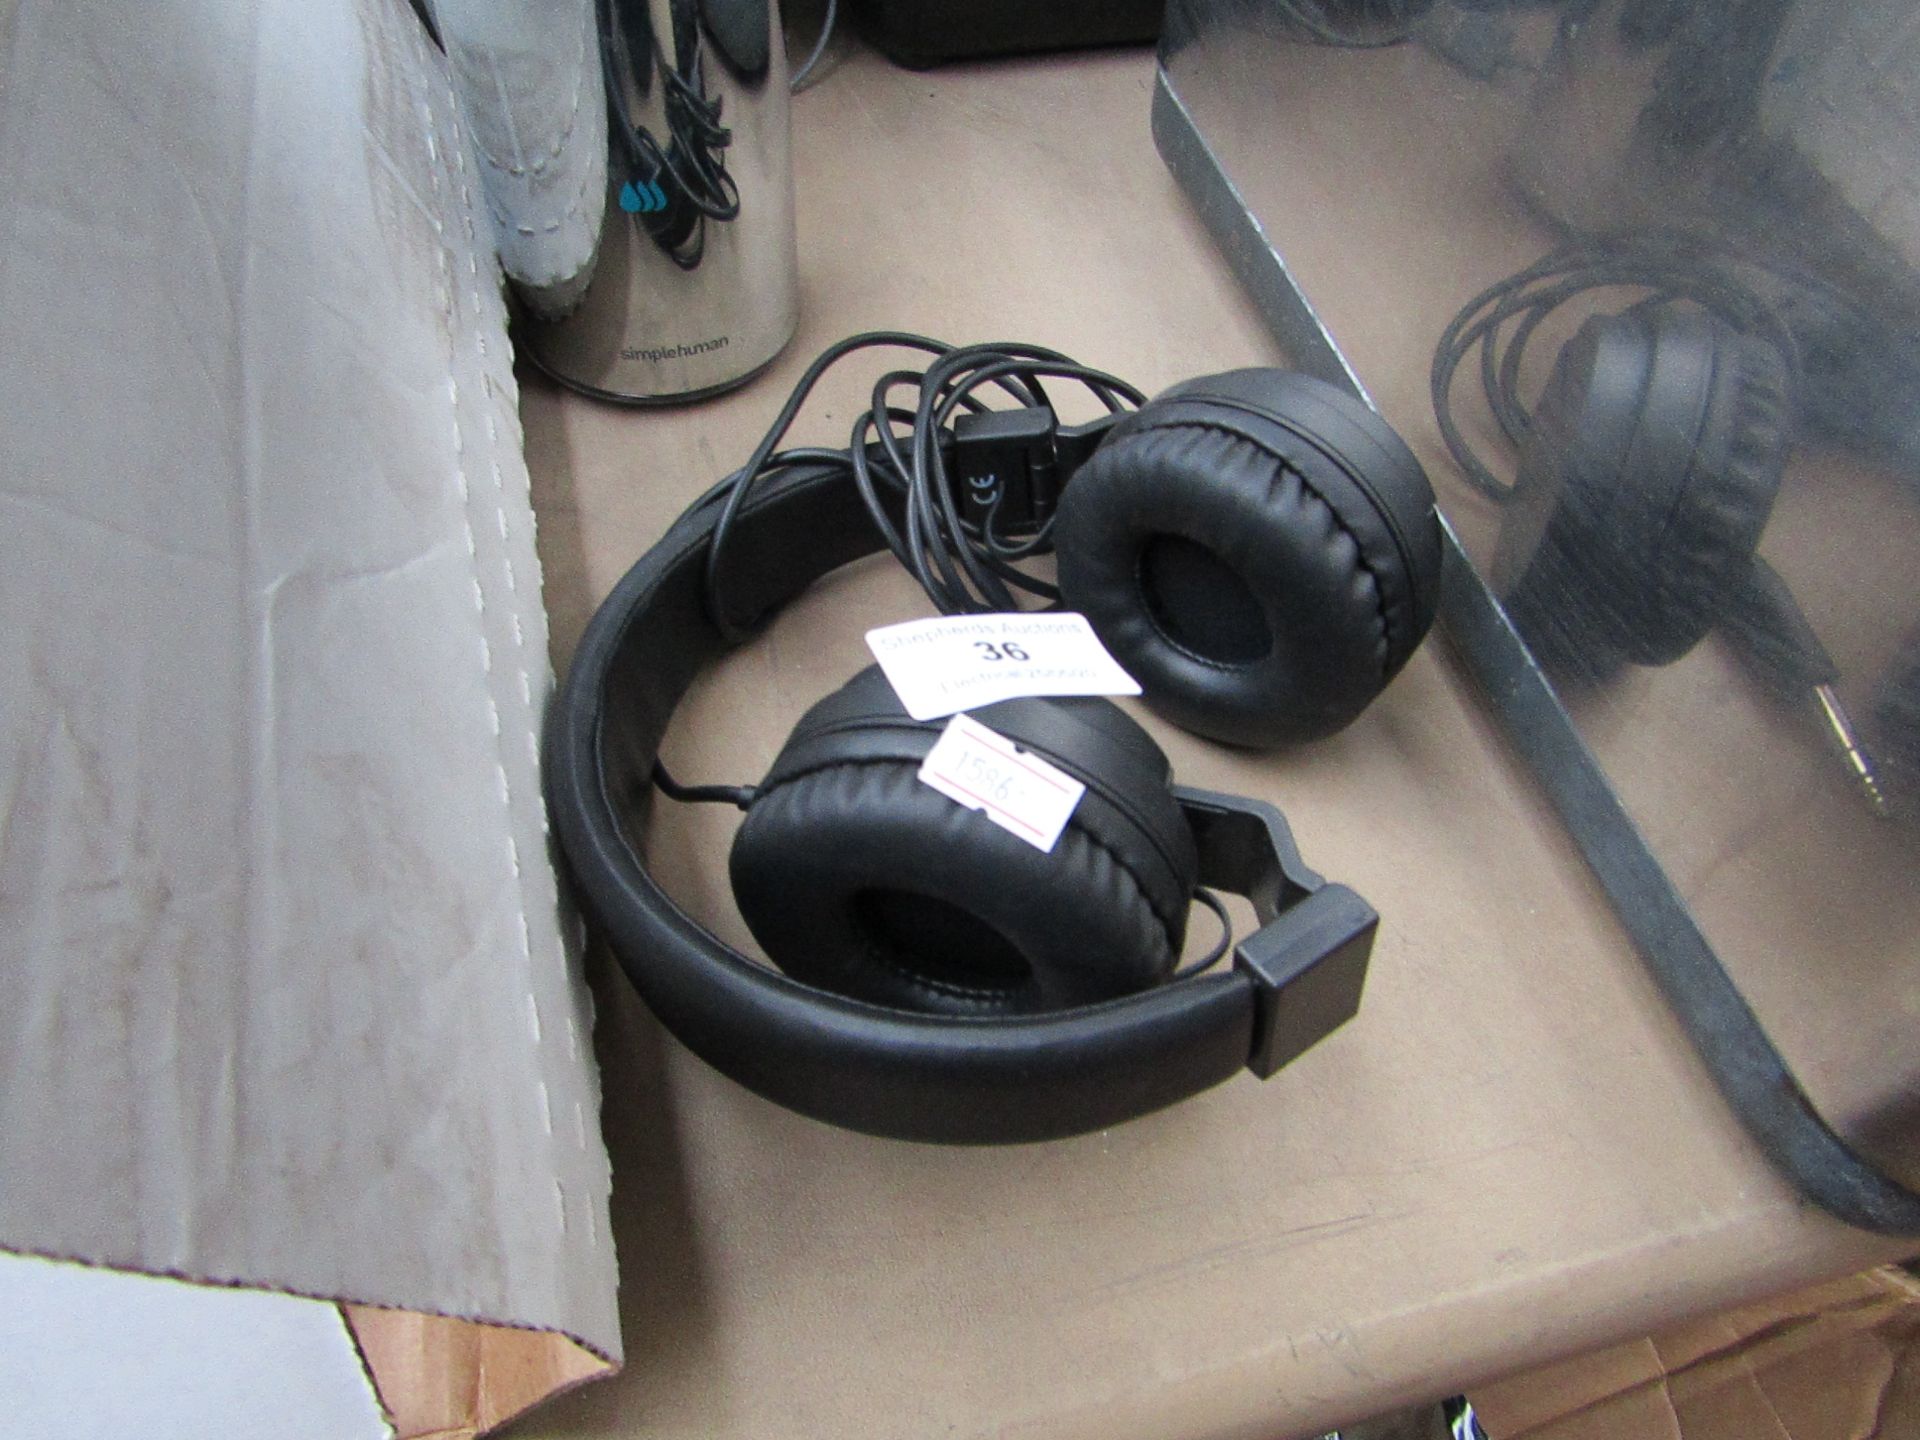 Unbranded music headphones with 6.35mm headphone jack cable, untested due to headphone jack cable.